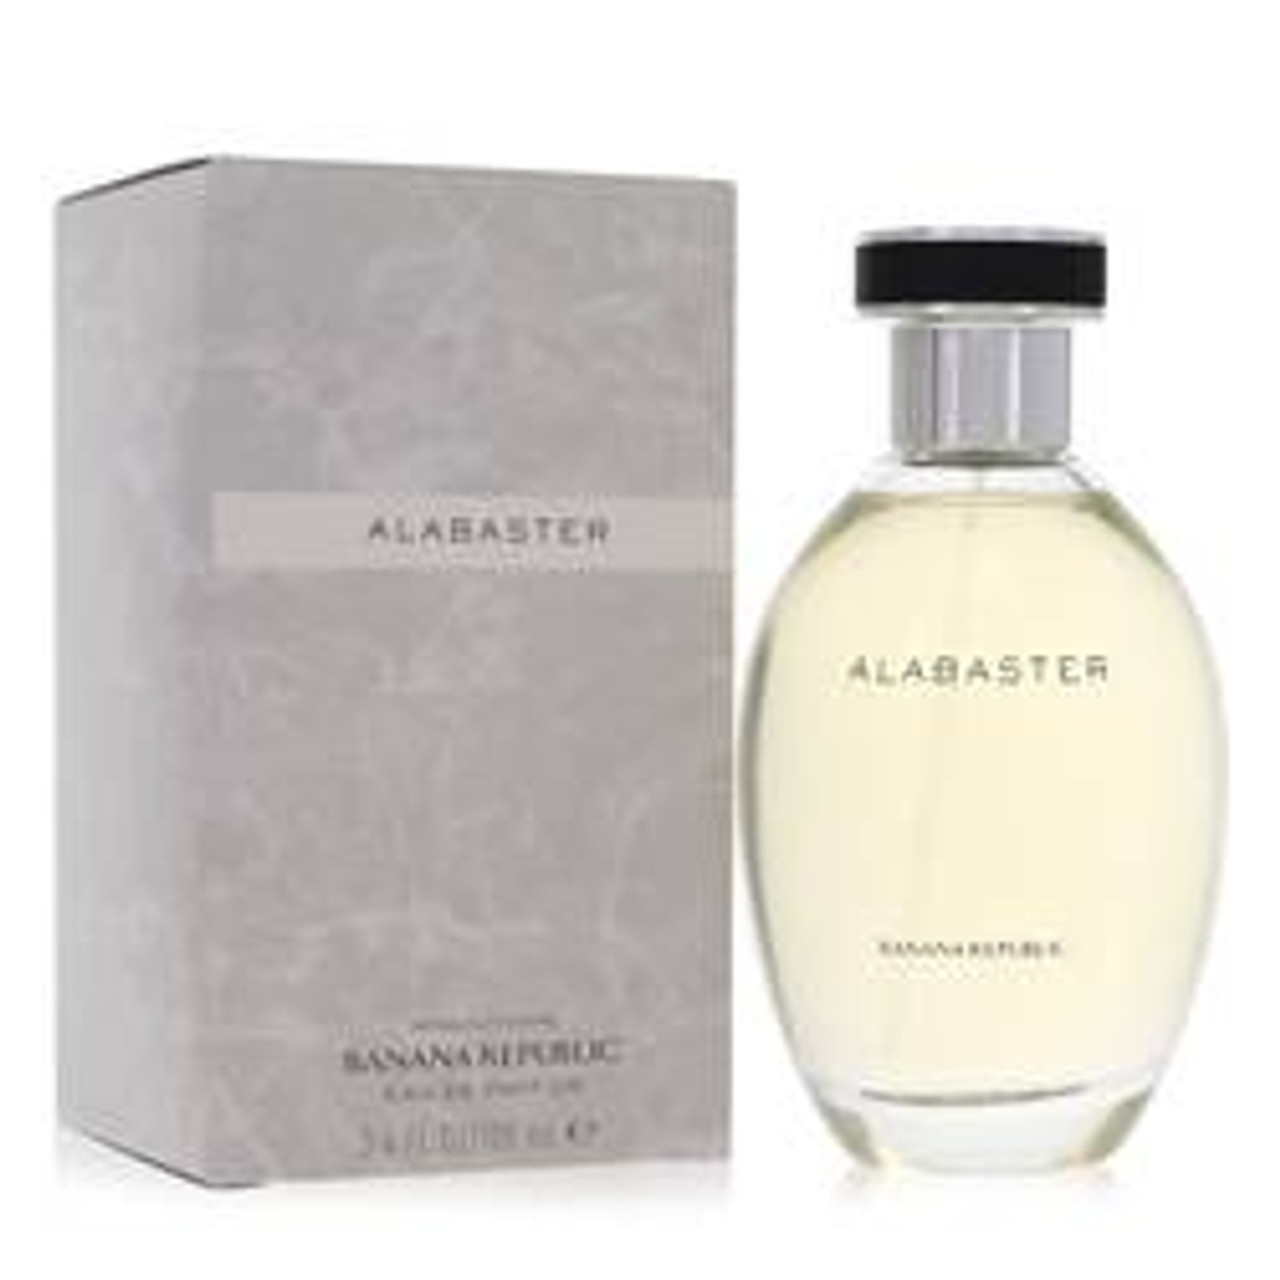 Alabaster Perfume By Banana Republic Eau De Parfum Spray 3.4 oz for Women - [From 63.00 - Choose pk Qty ] - *Ships from Miami